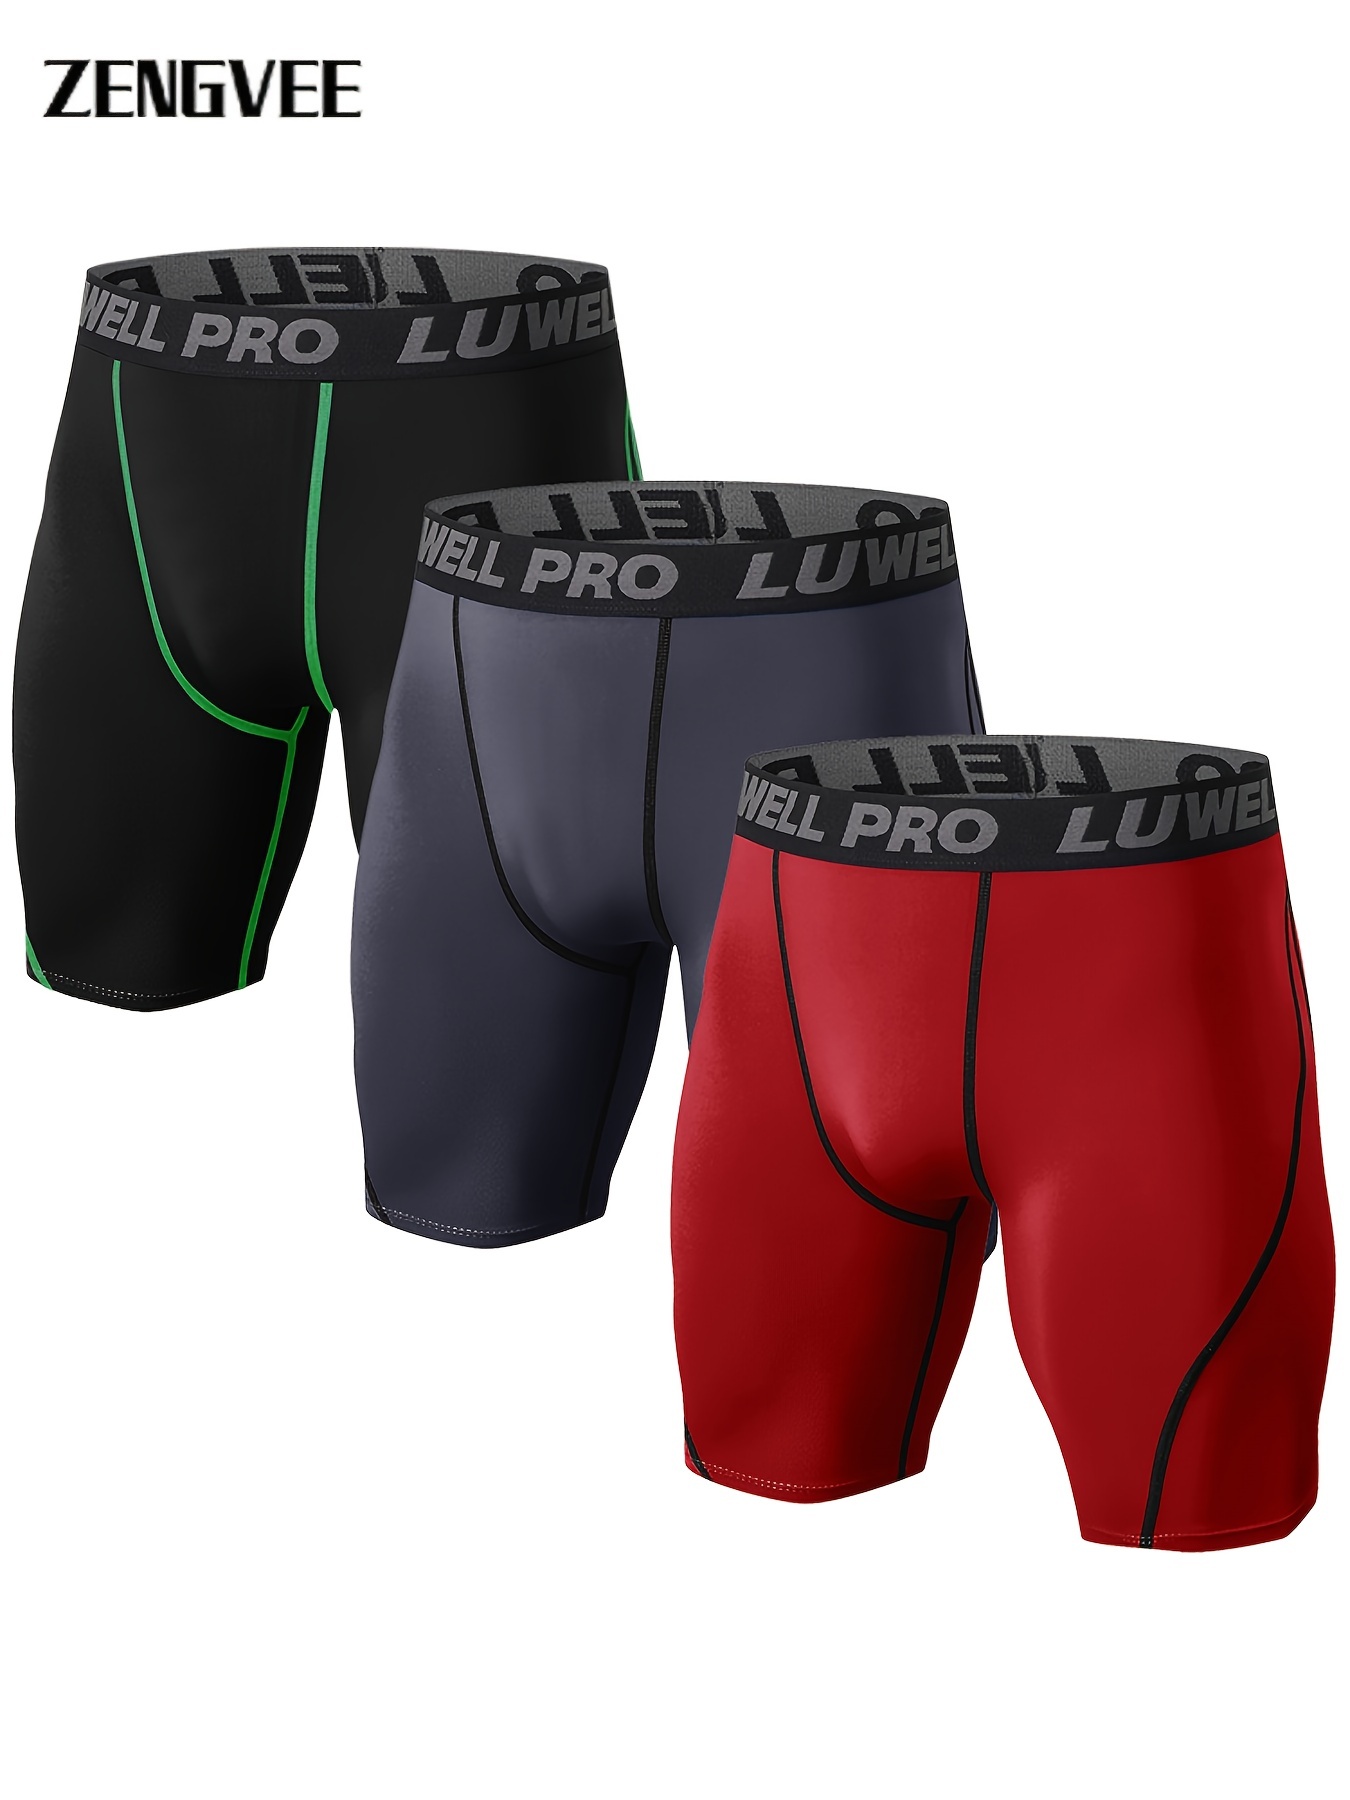 NELEUS Men's Performance Compression Shorts Athletic Workout Underwear 3  Pack,Black+Gray+Navy Blue,US Size XL 